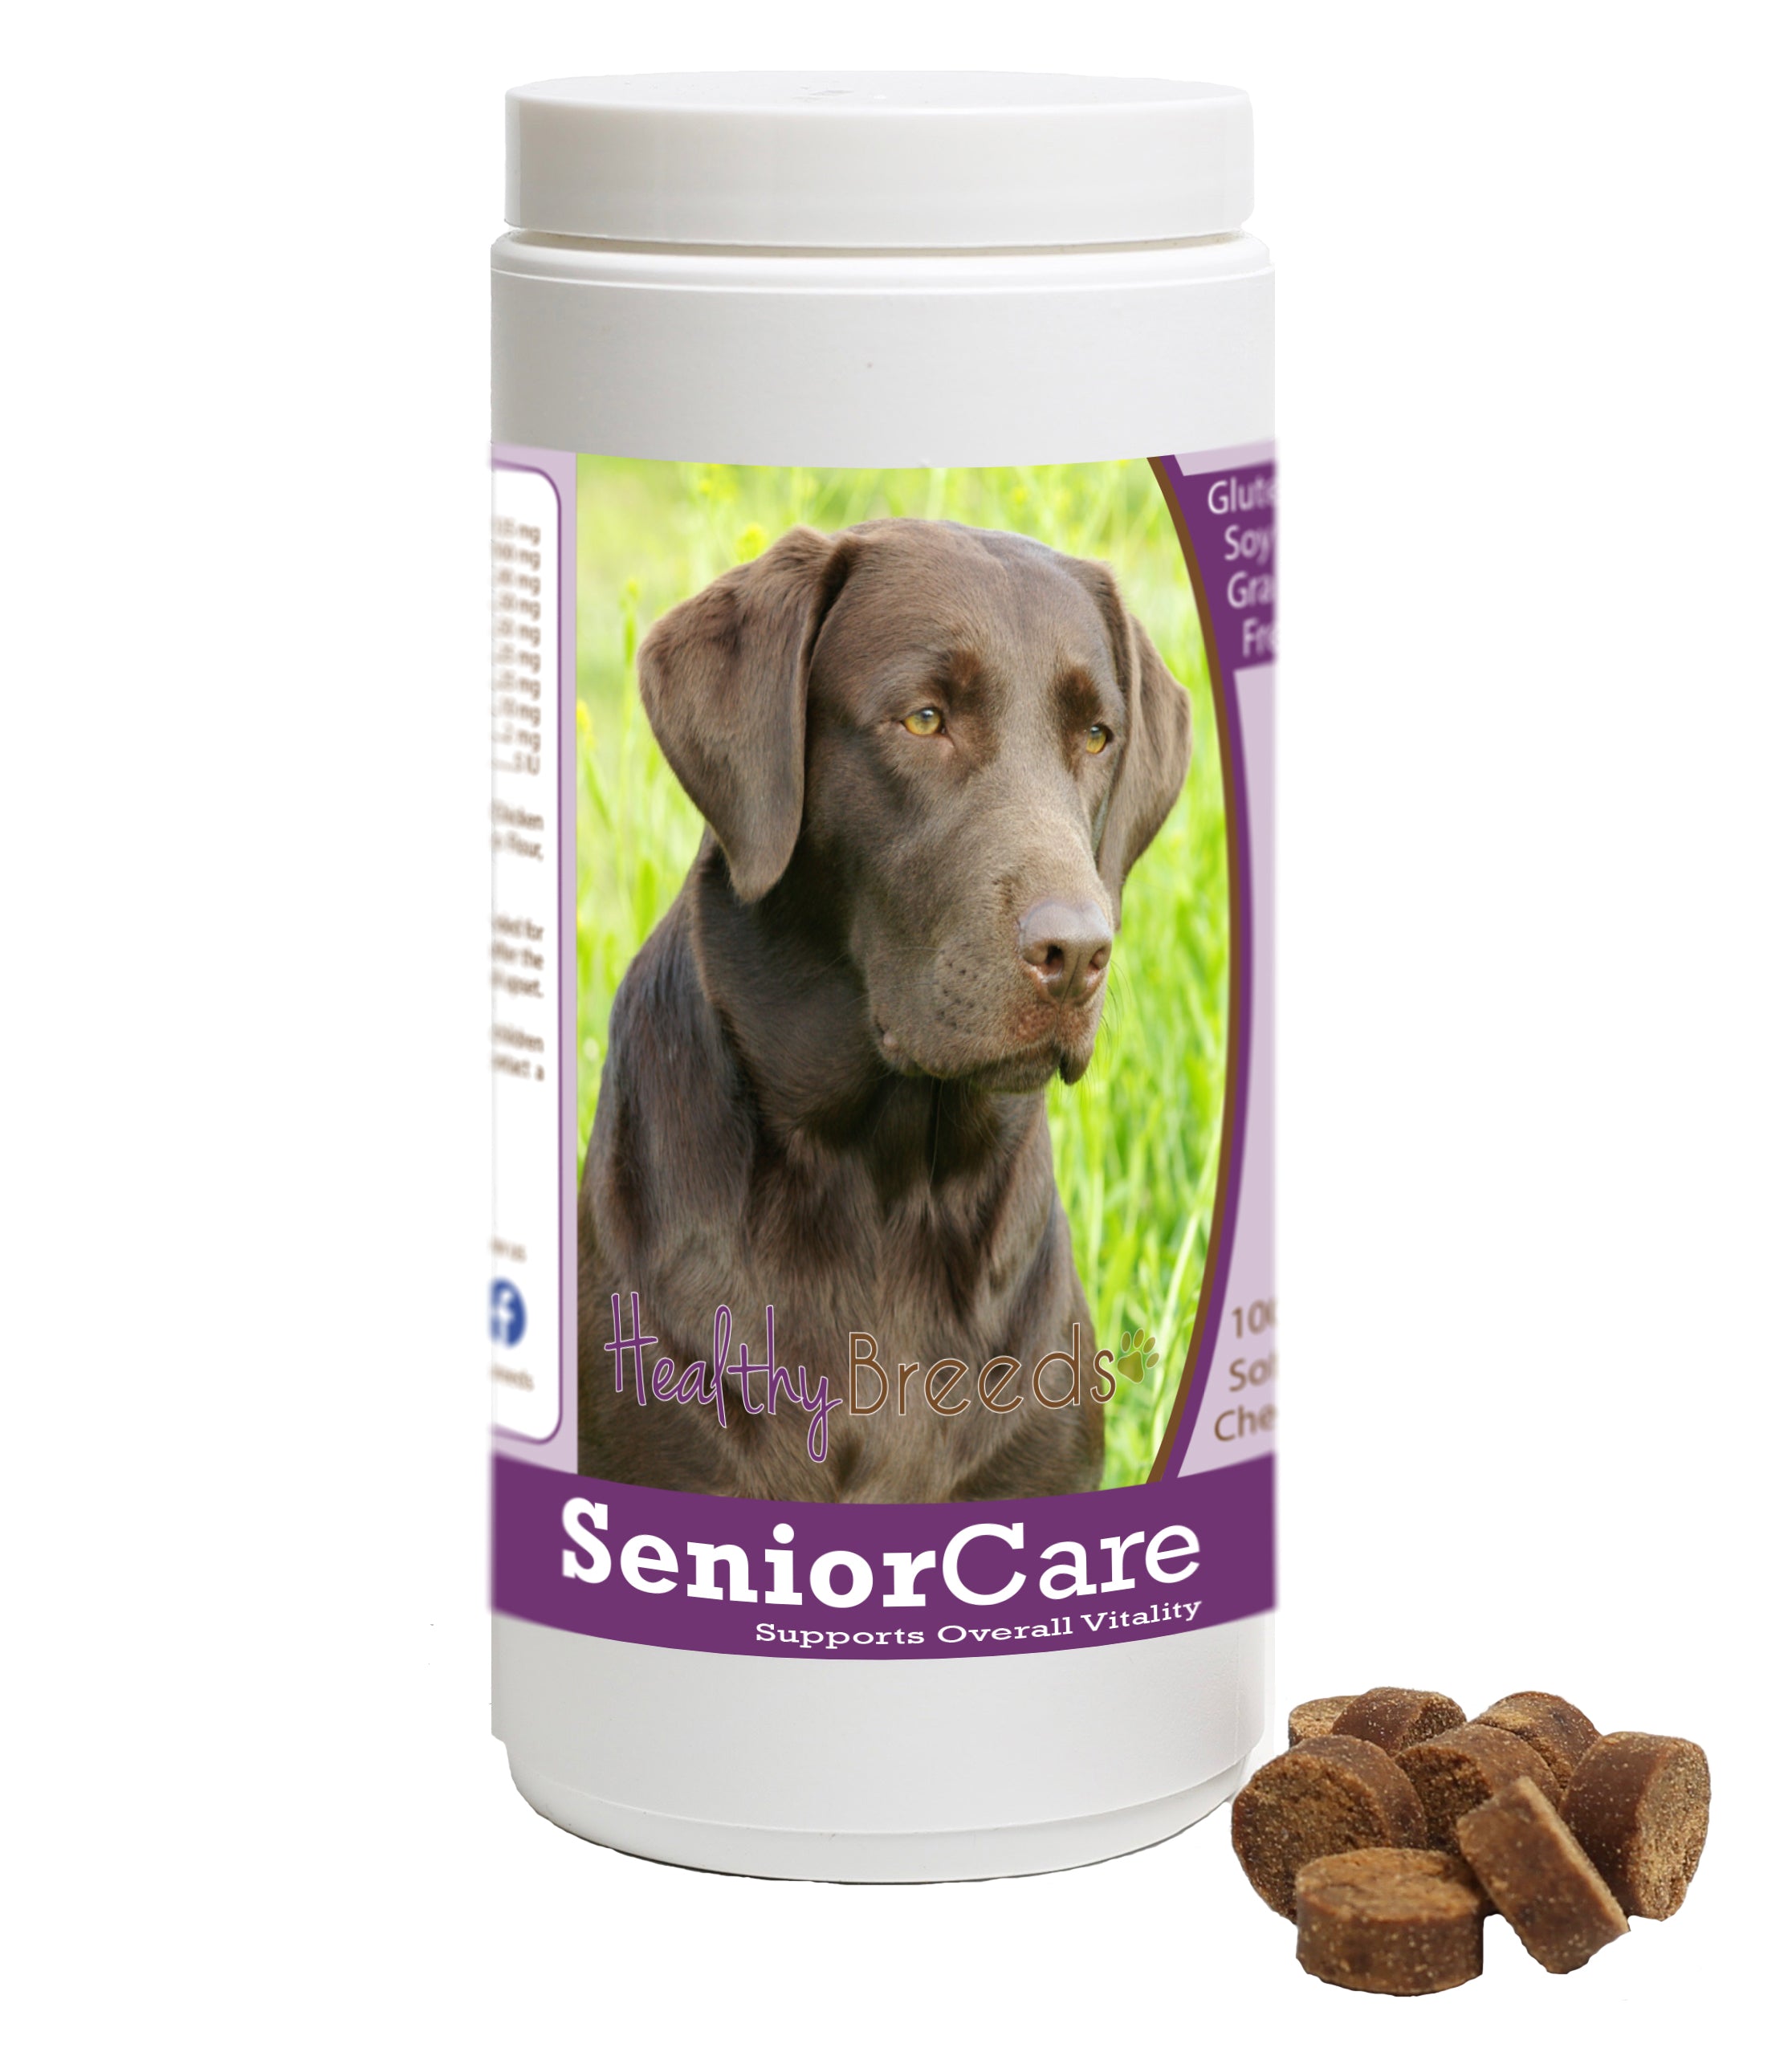 Healthy Breeds Senior Dog Care Soft Chews - Beagle